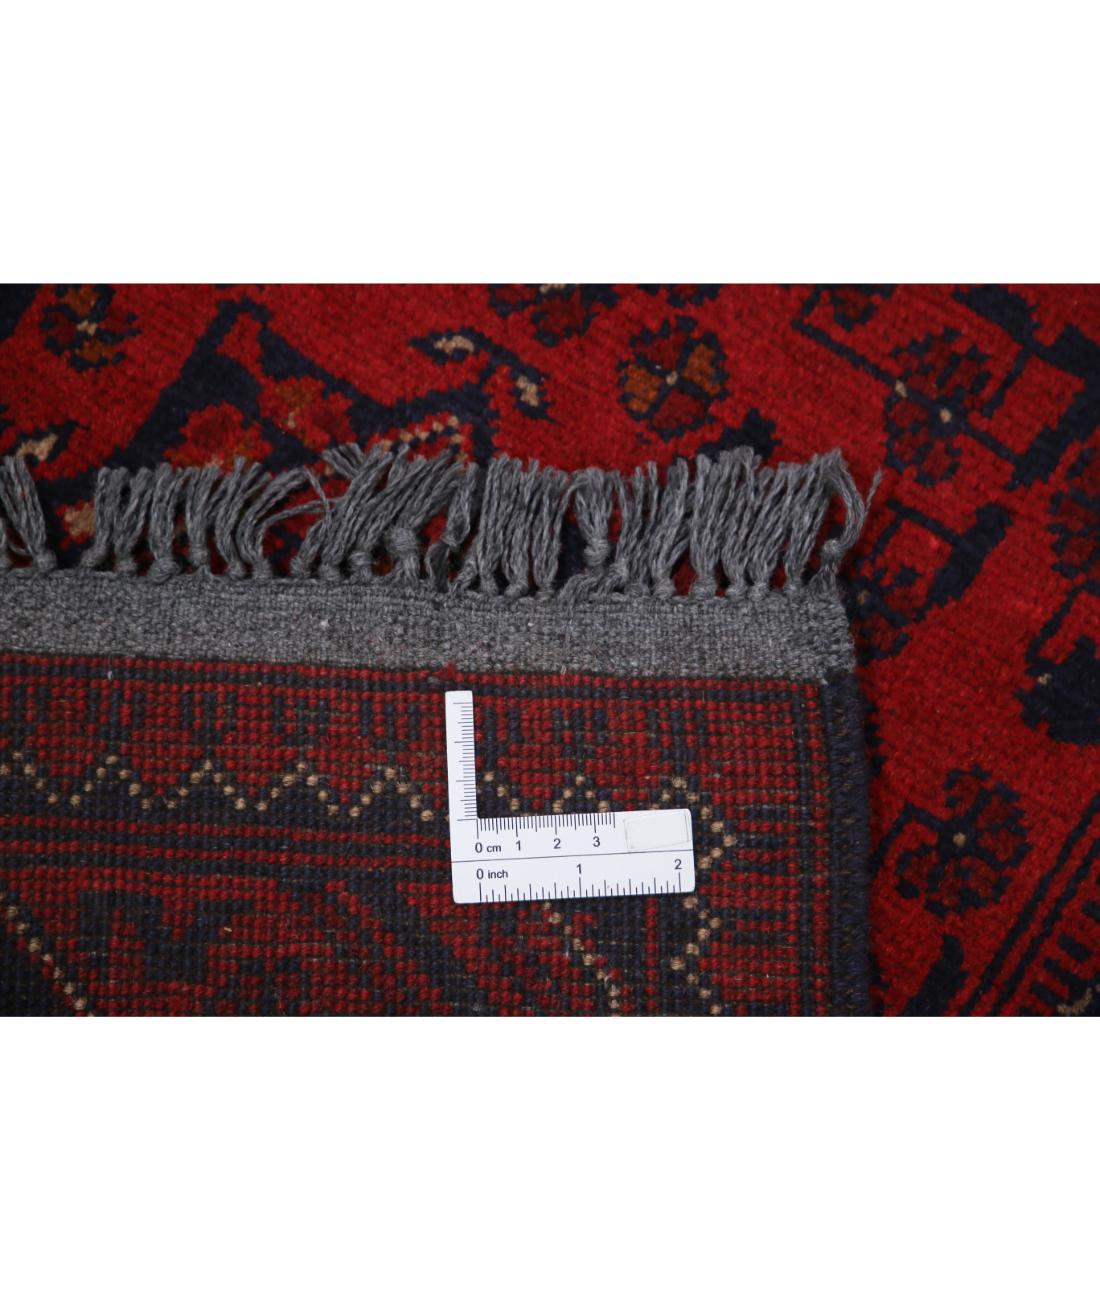 Hand Knotted Afghan Khamyab Wool Rug - 2'7'' x 9'5'' 2' 7" X 9' 5" (79 X 287) / Red / Blue